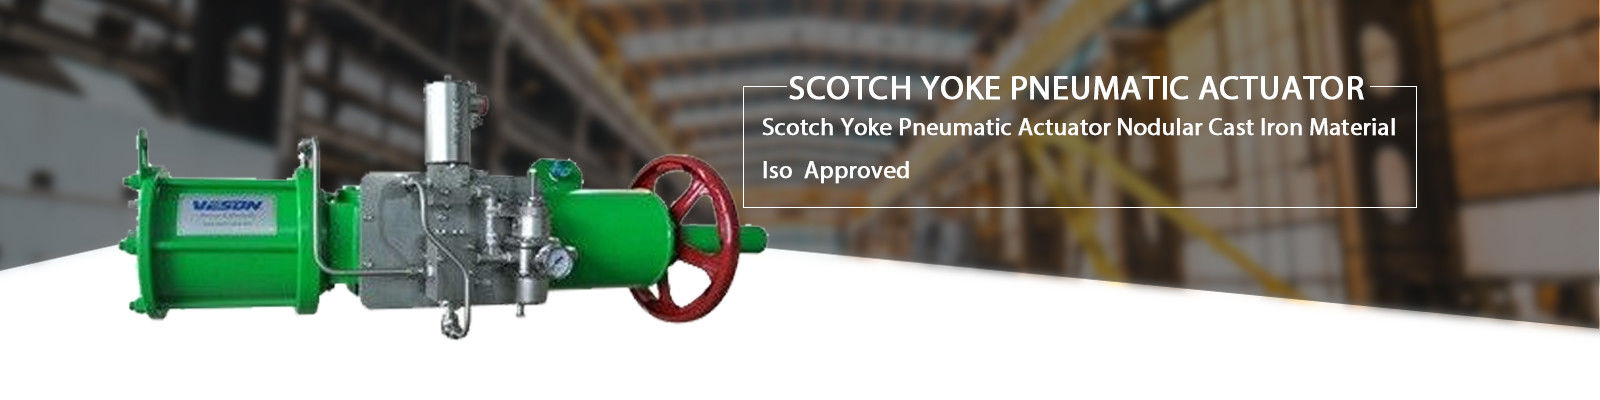 Scotch Yoke pneumatischem Antrieb